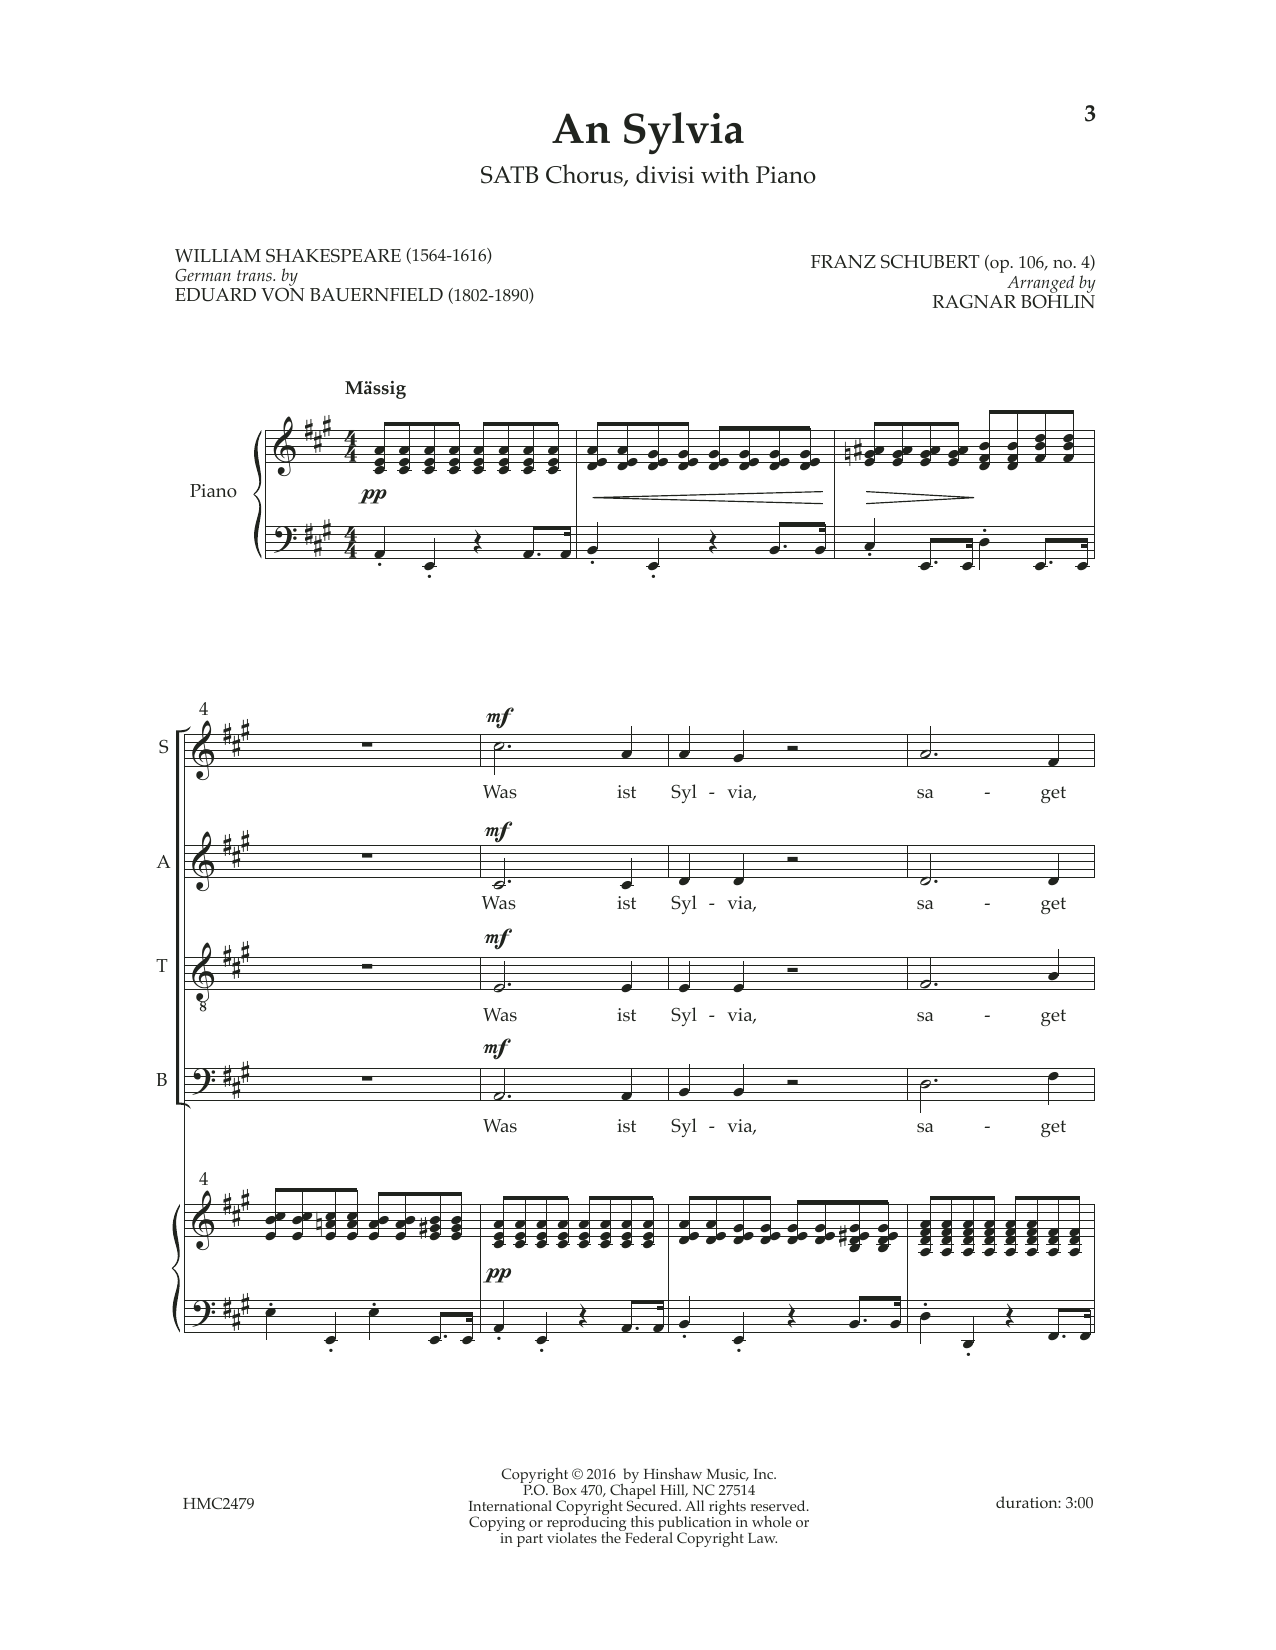 Franz Schubert An Sylvia (op. 106, No. 4) (arr. Ragnar Bohlin) Sheet Music Notes & Chords for SATB Choir - Download or Print PDF